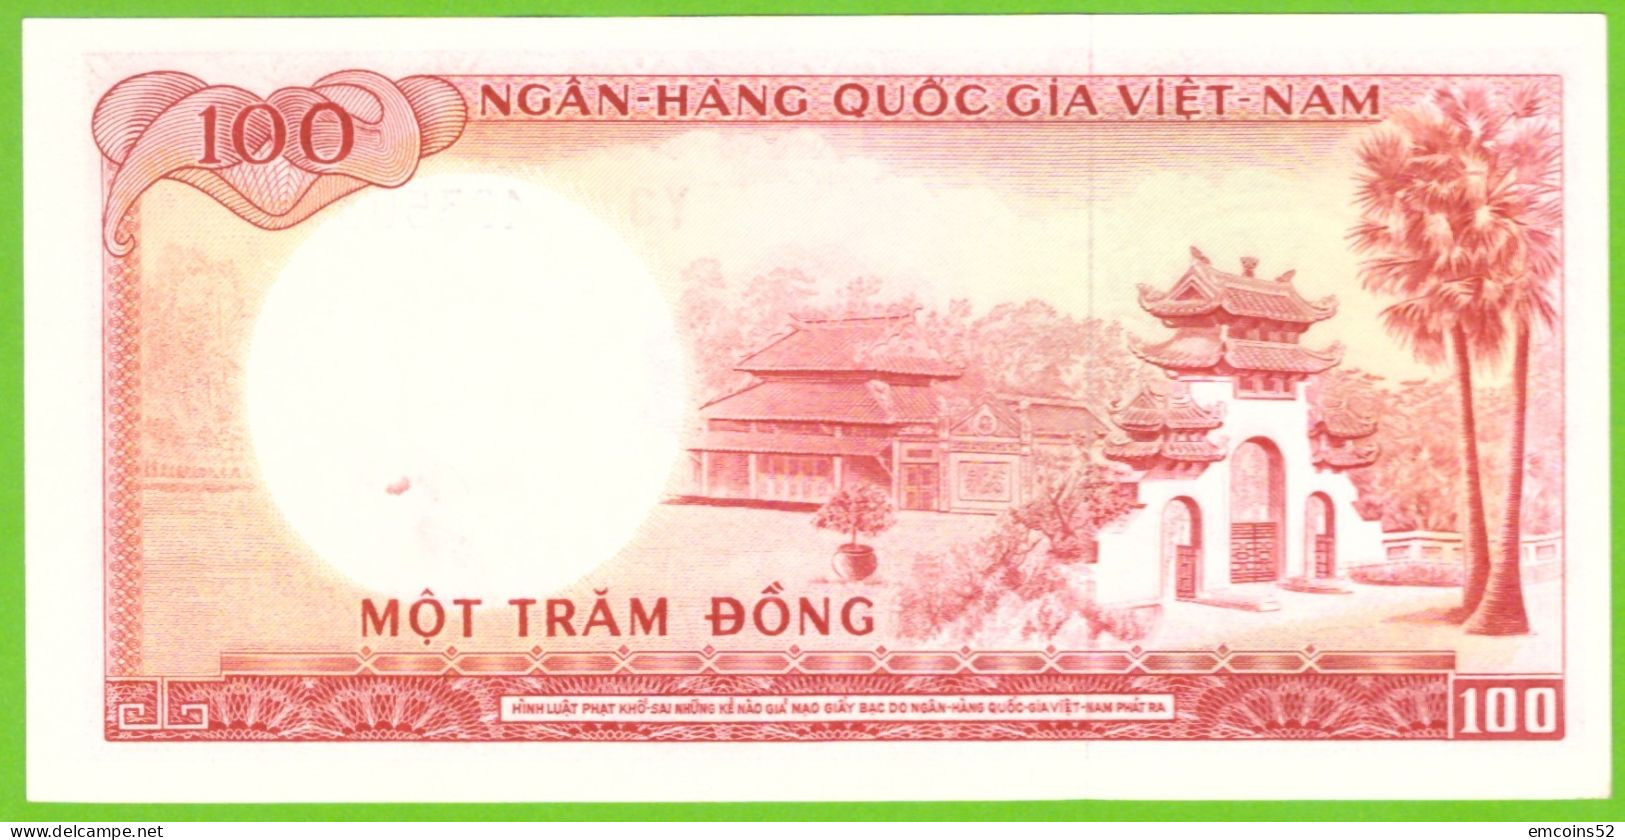 VIETNAM 100 DONG 1966  P-19b  UNC - Viêt-Nam